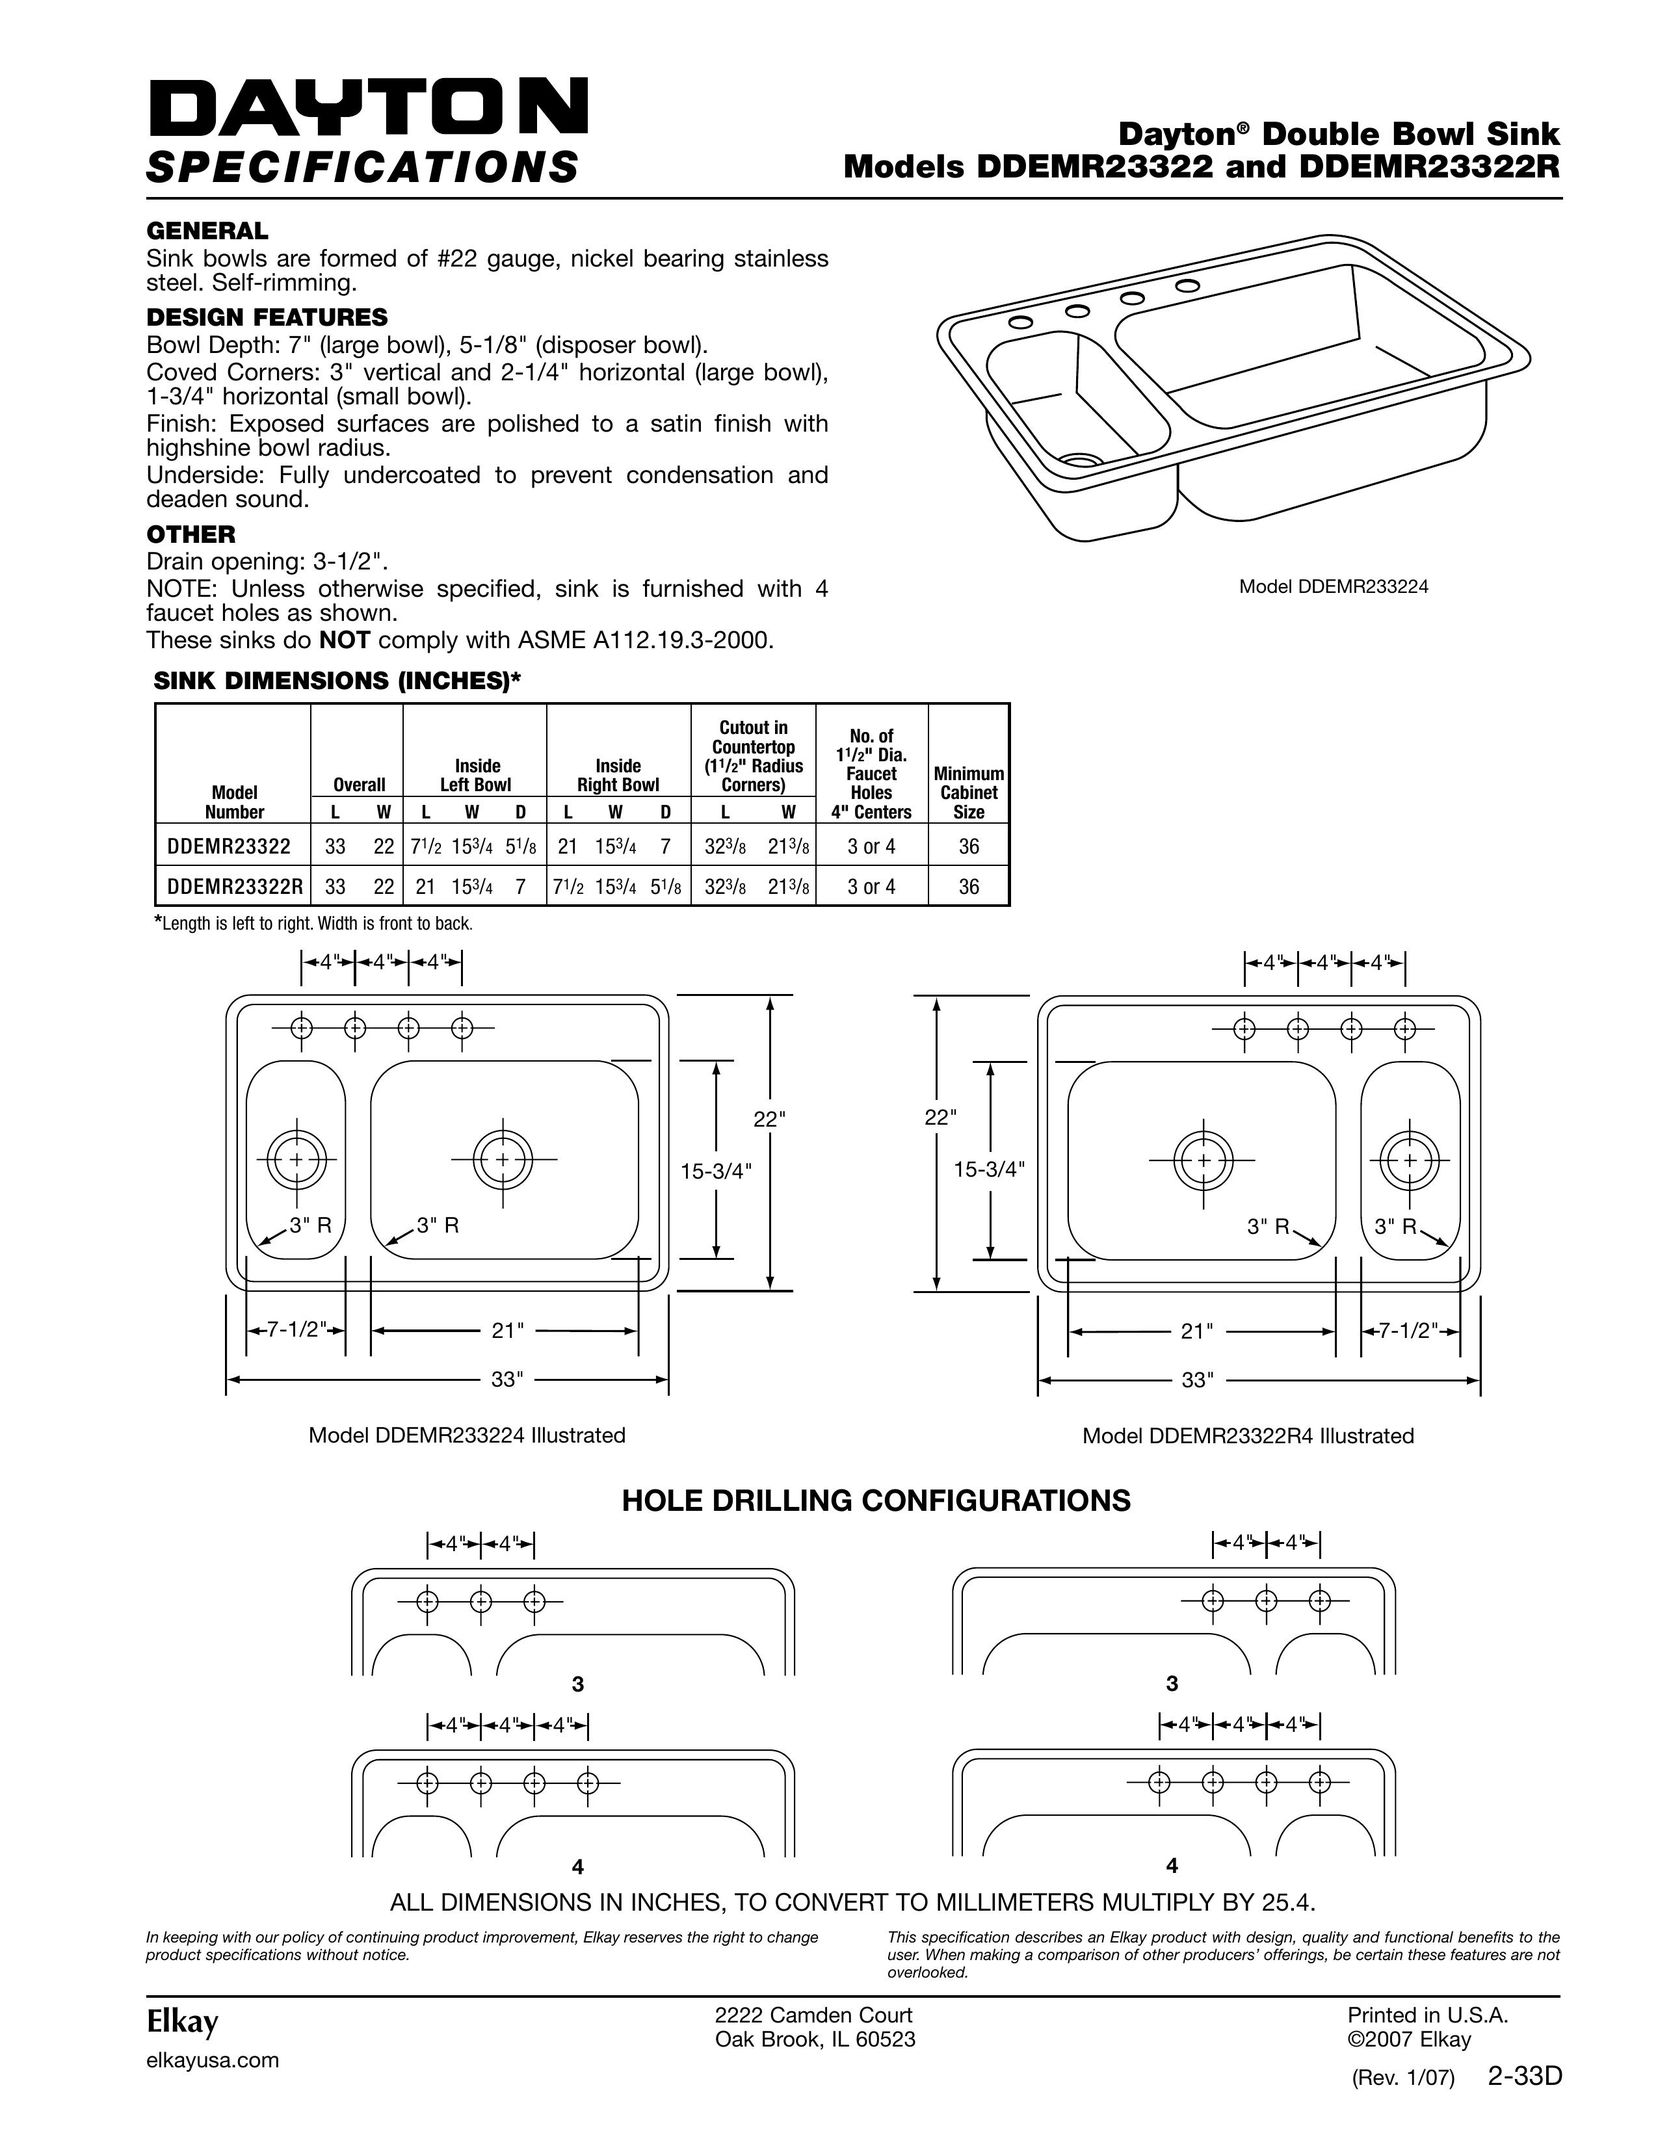 Dayton DDEMR23322R Indoor Furnishings User Manual